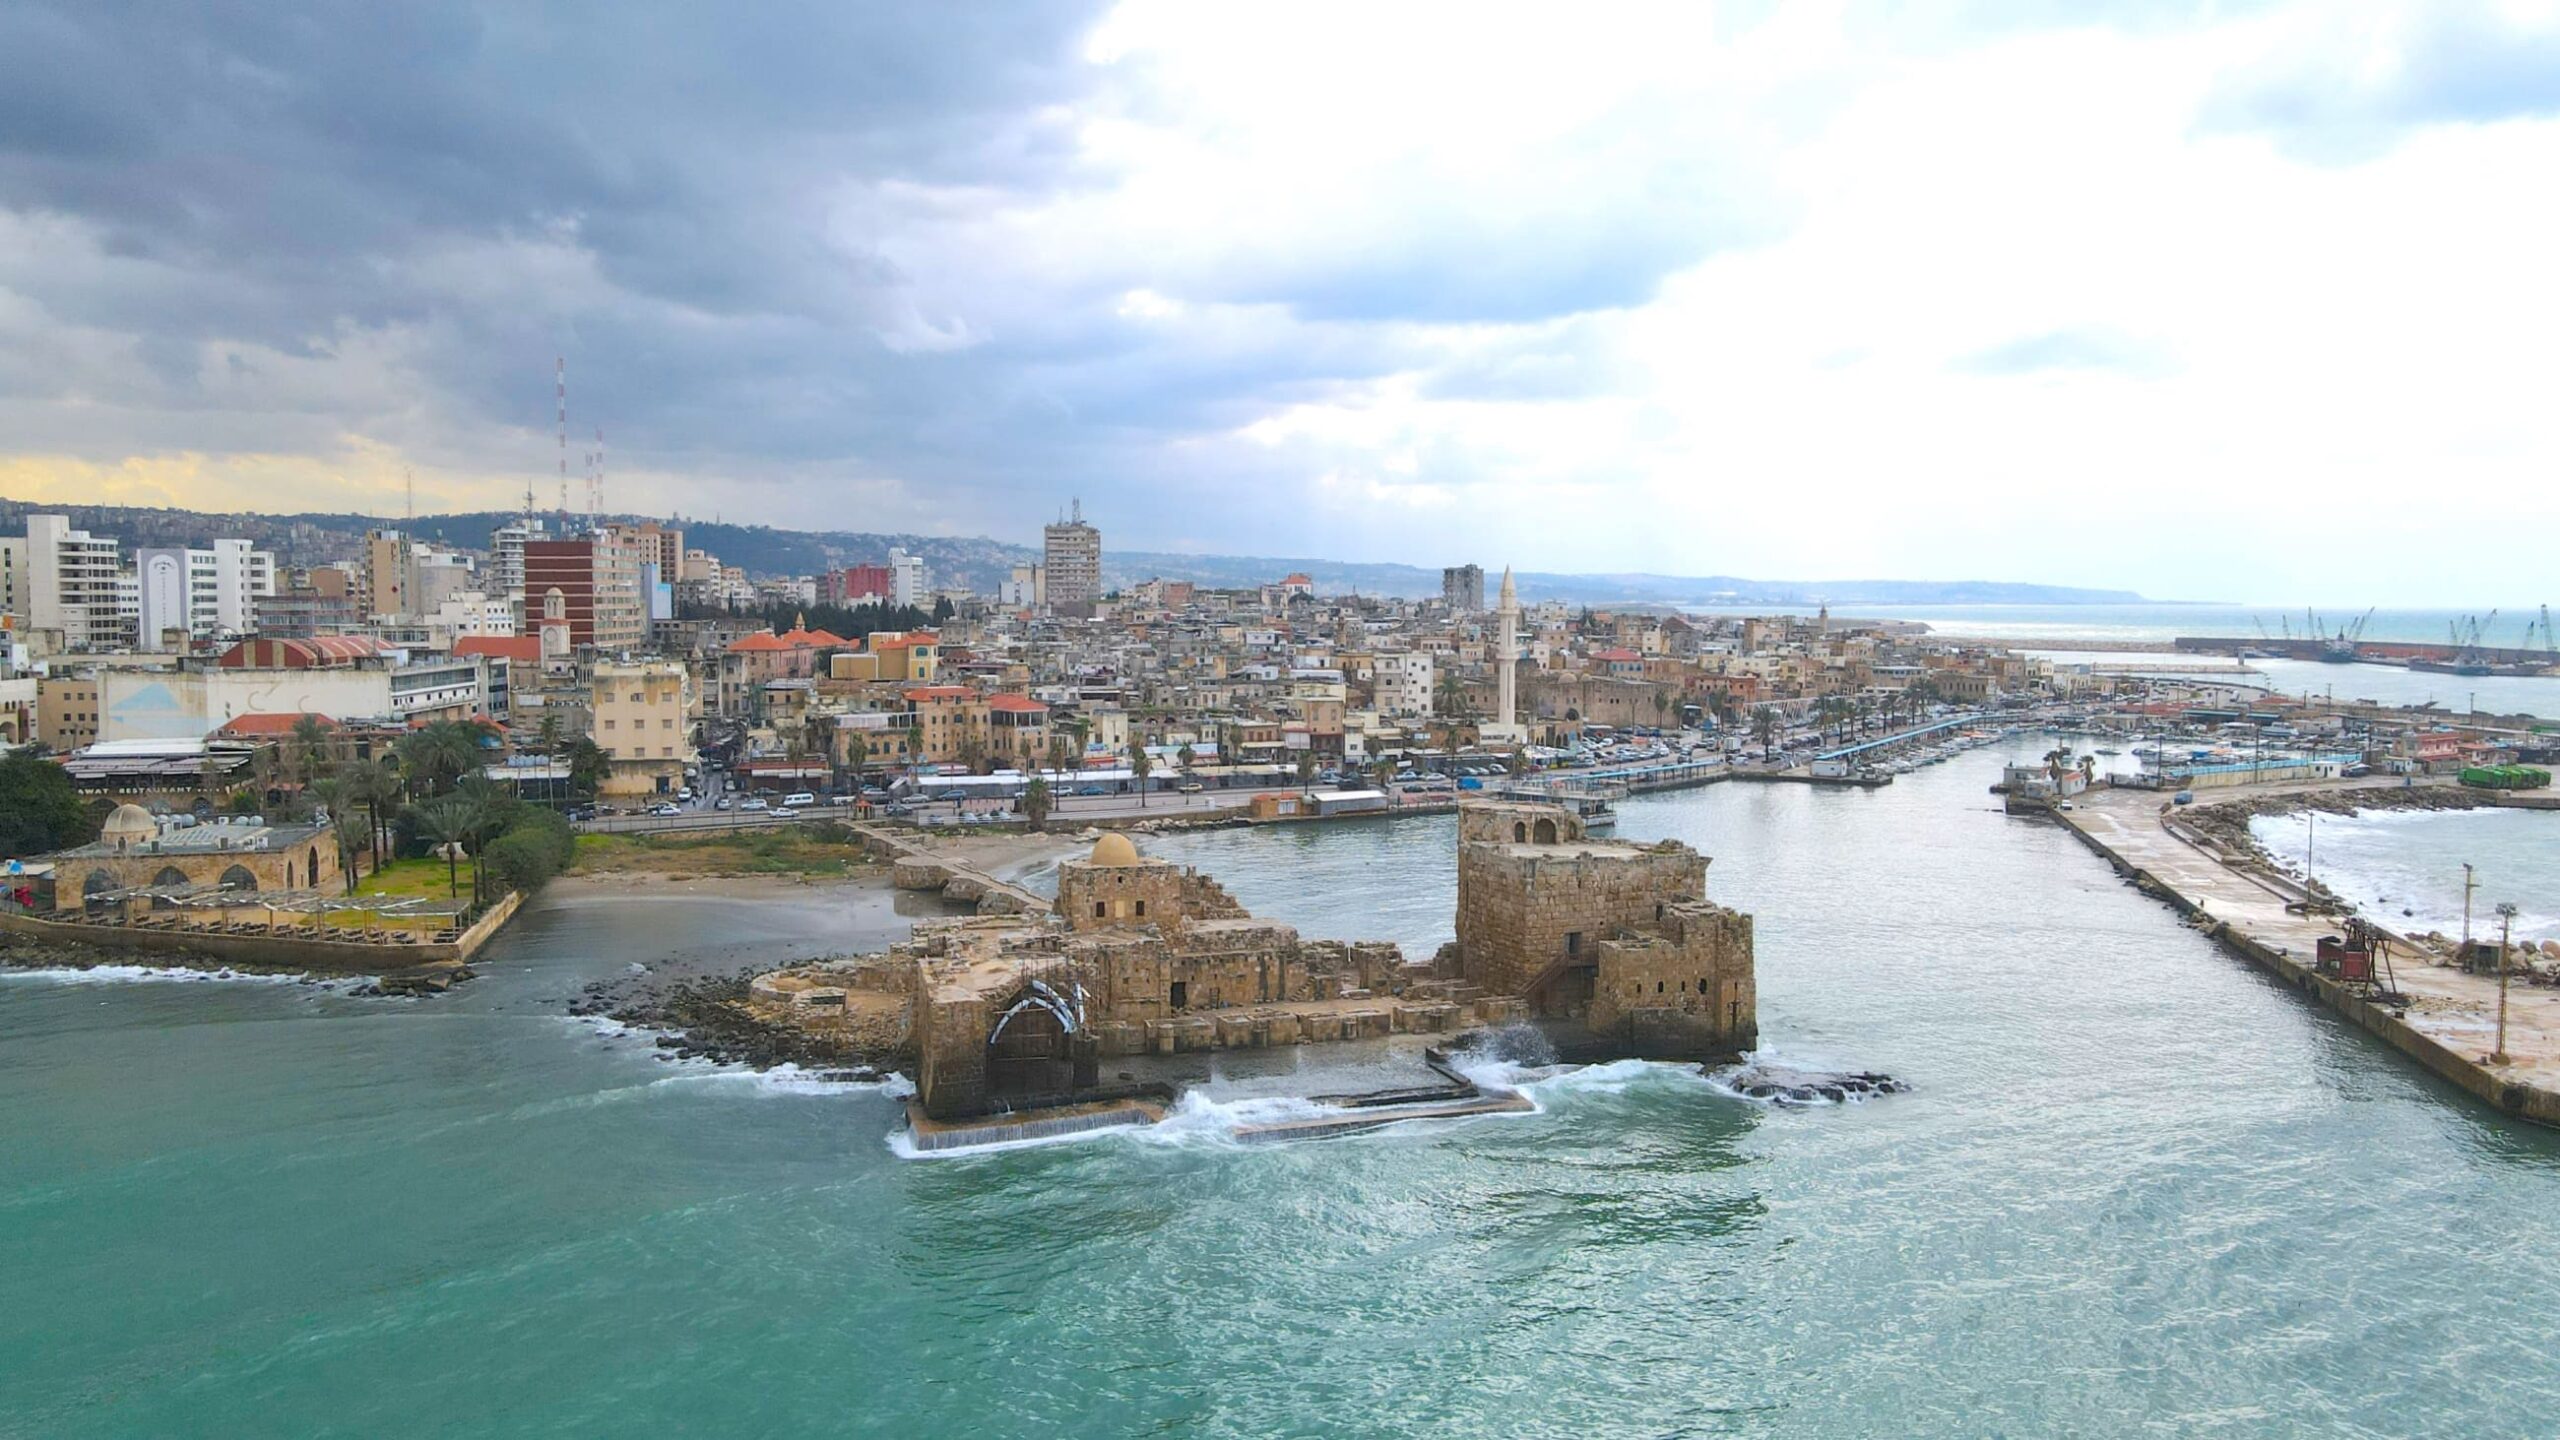 Sidon, Lebanon seen from the Mediterranean Sea